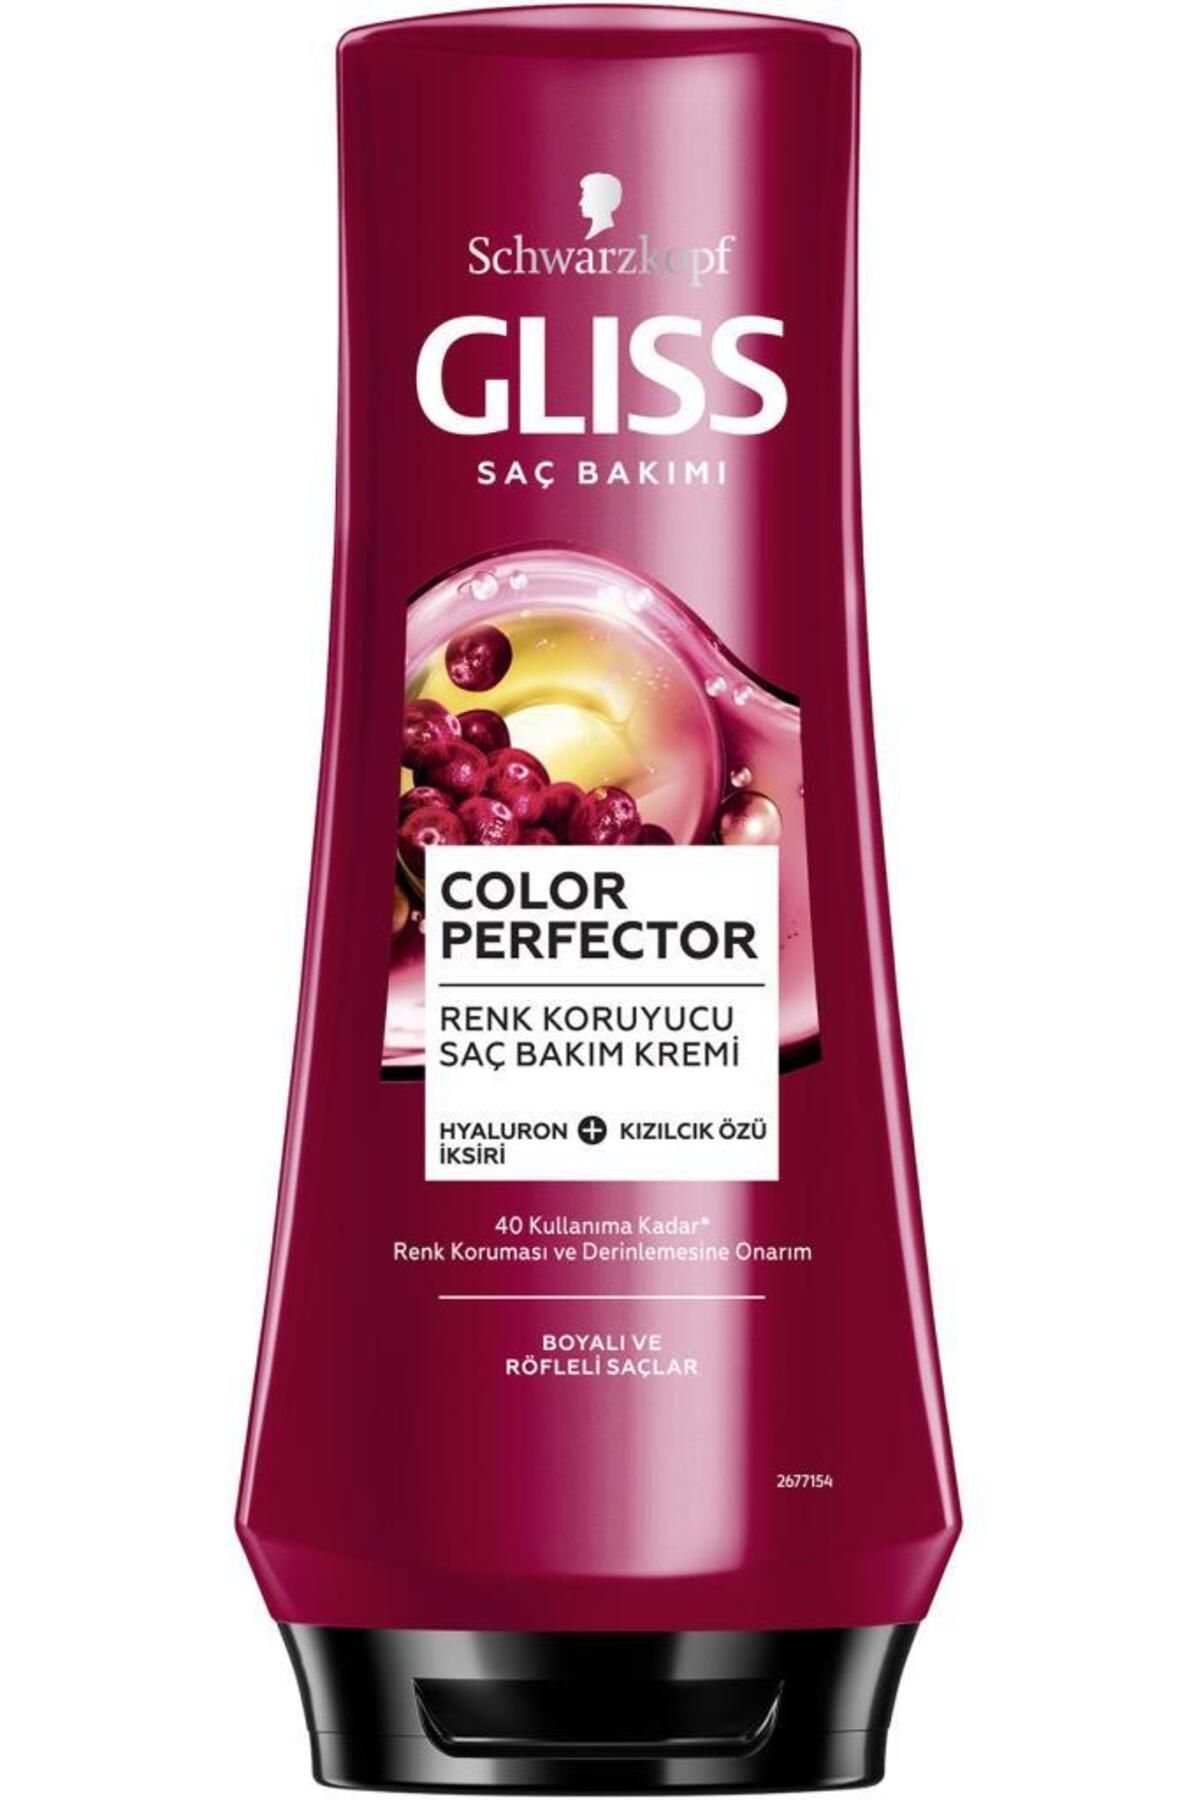 Gliss محافظ رنگ مو شامپو 500 میلی لیتر و کرم مو 360 میلی لیتر